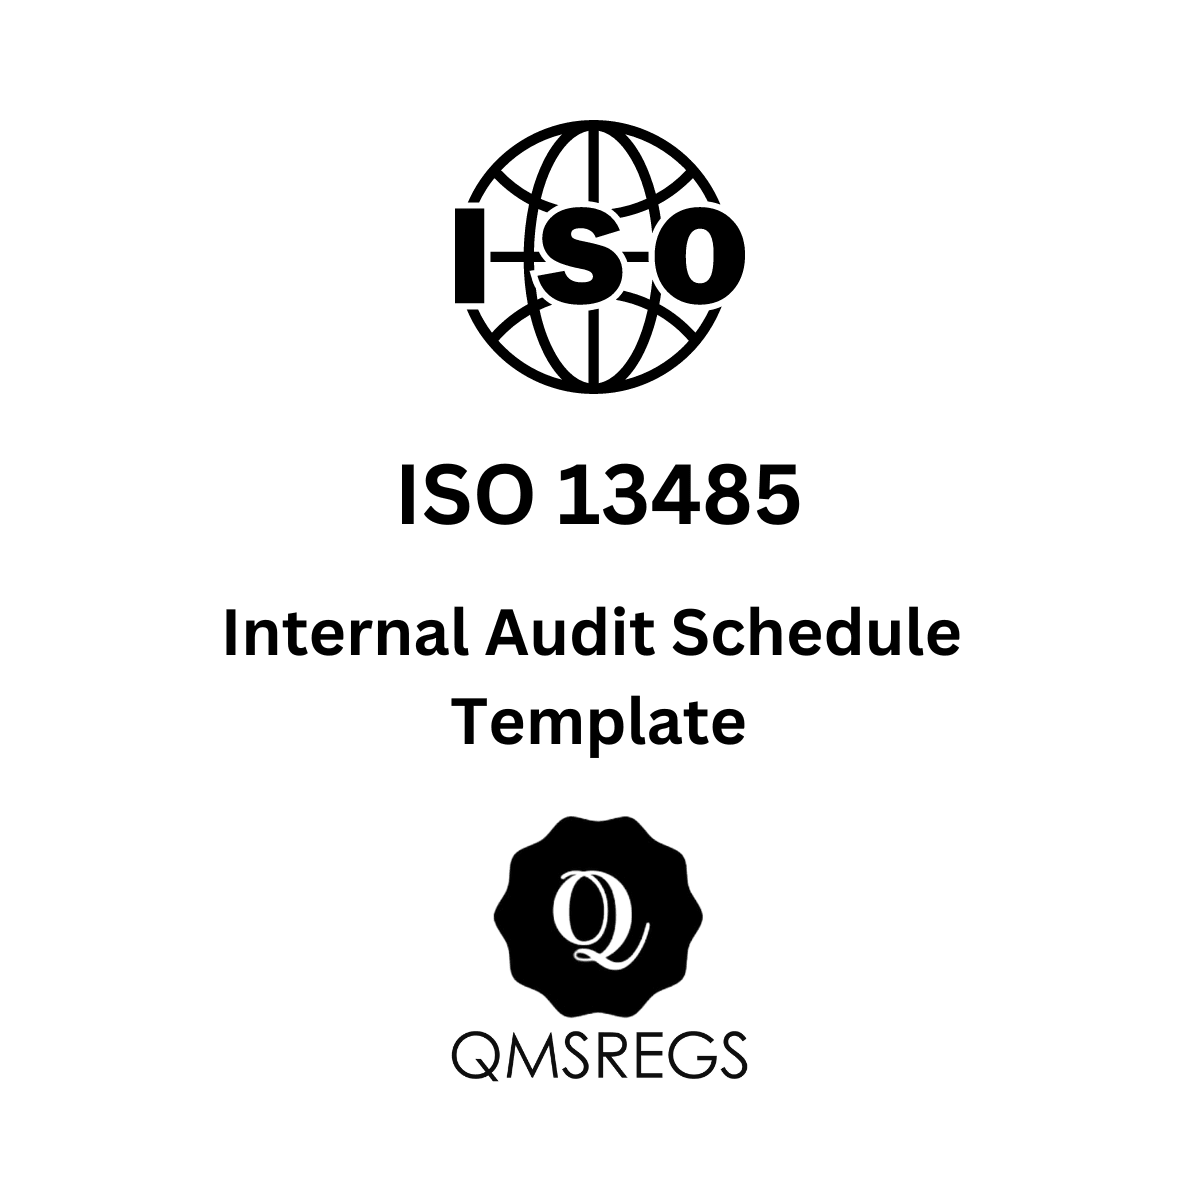 ISO 13485 Internal Audit Schedule Template